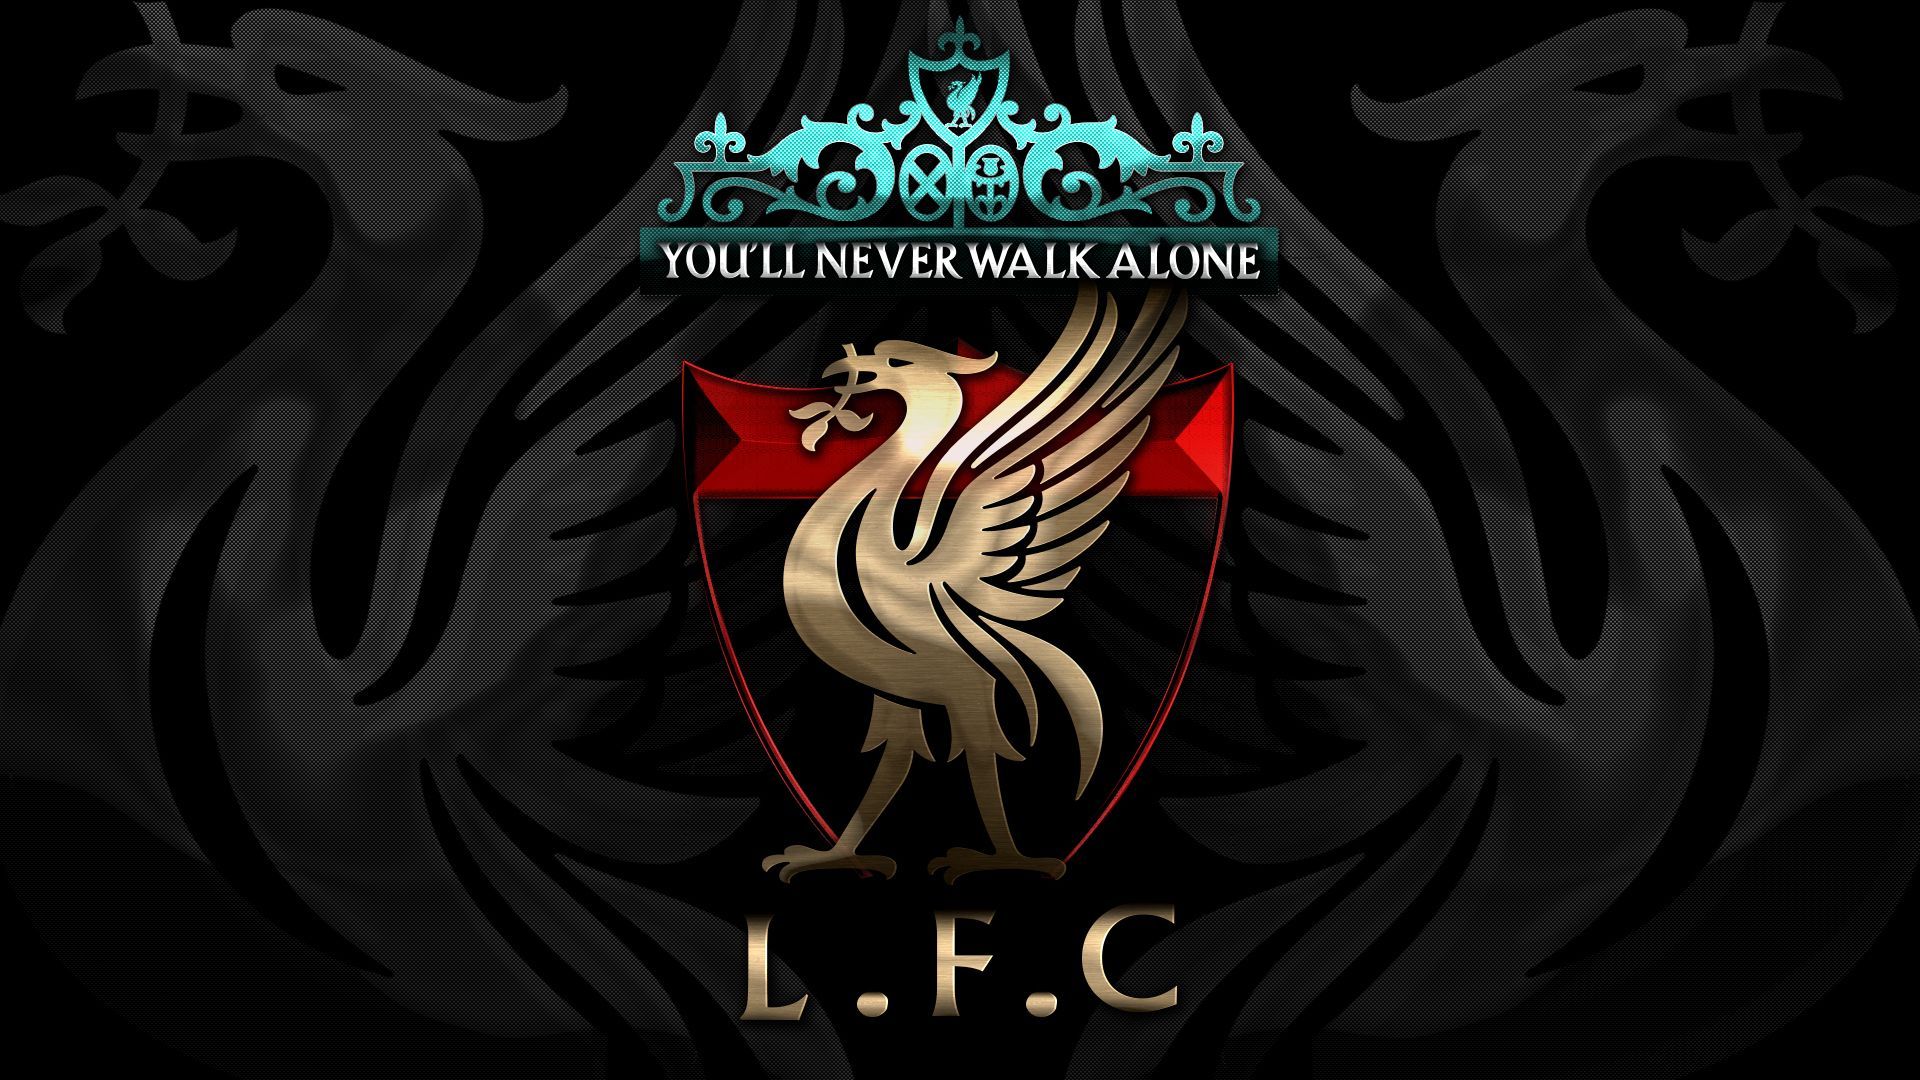 Download Liverpool F.C. Wallpaper Wide Images #56527 - Download ...